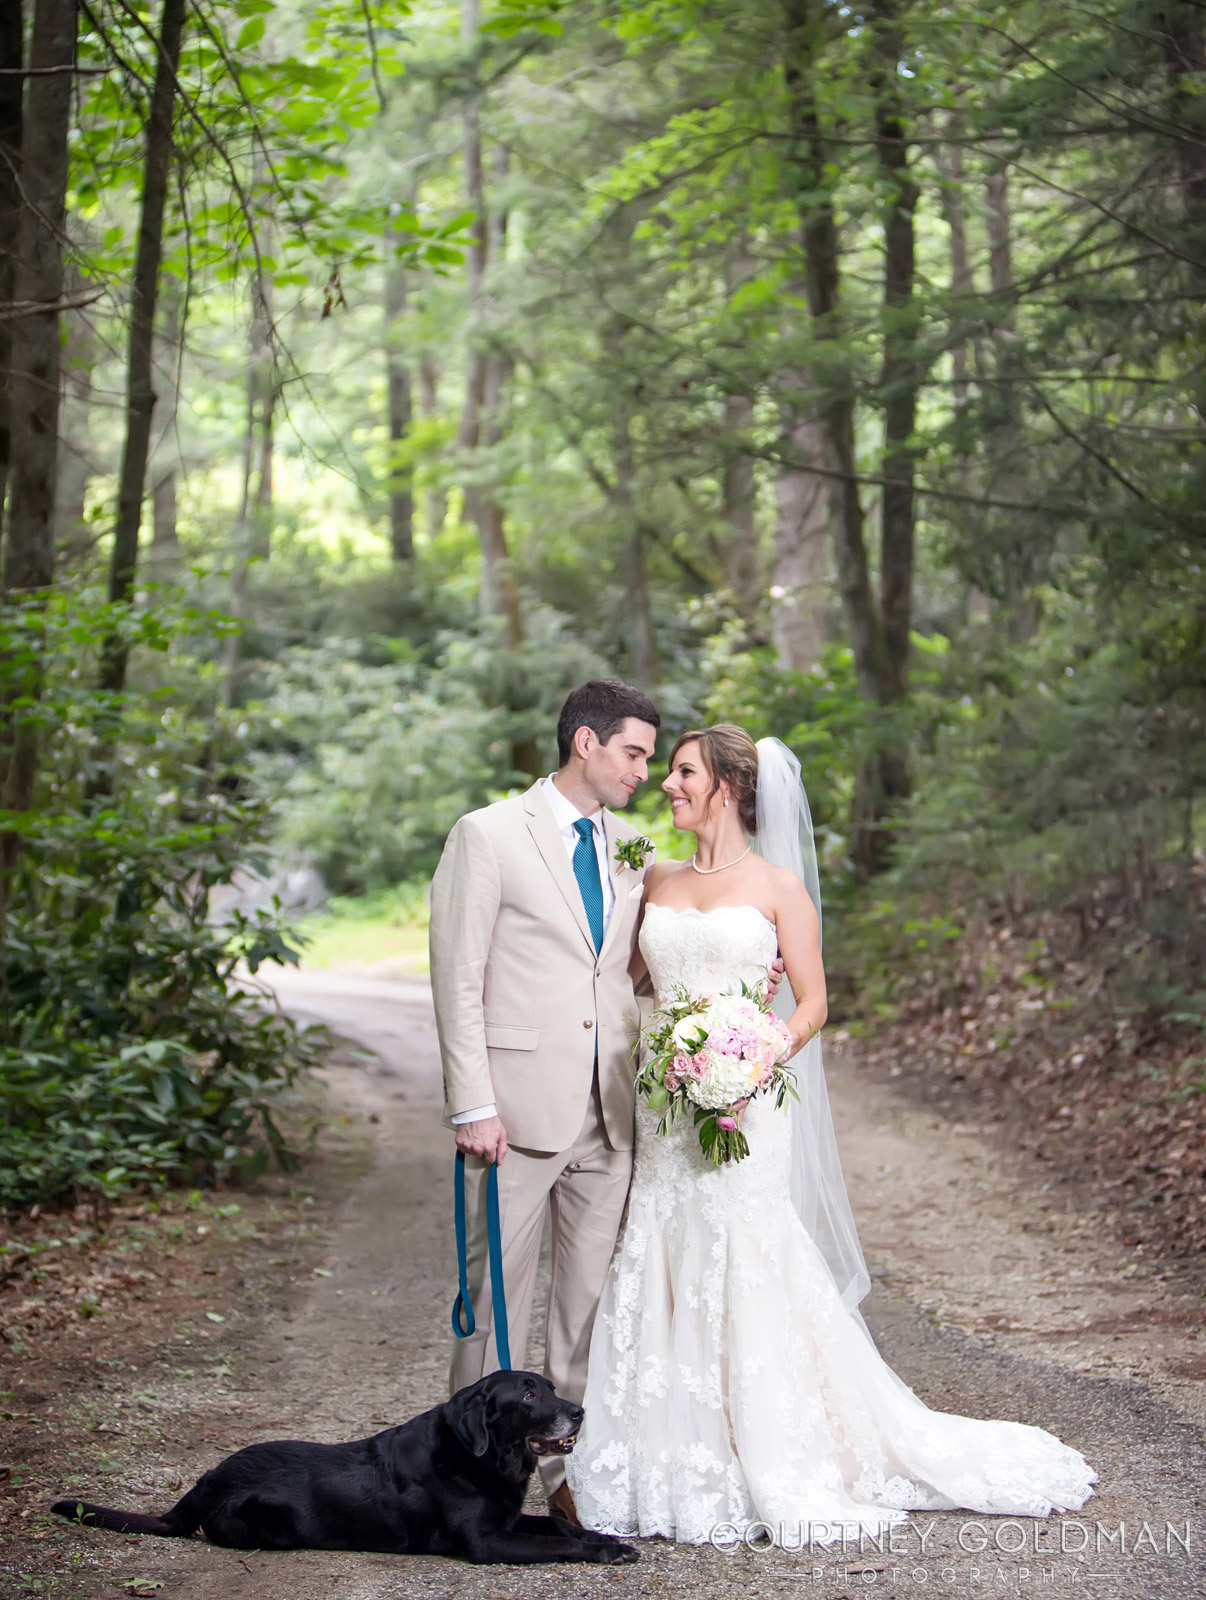 Atlanta-Wedding-Photography-by-Courtney-Goldman-18.jpg